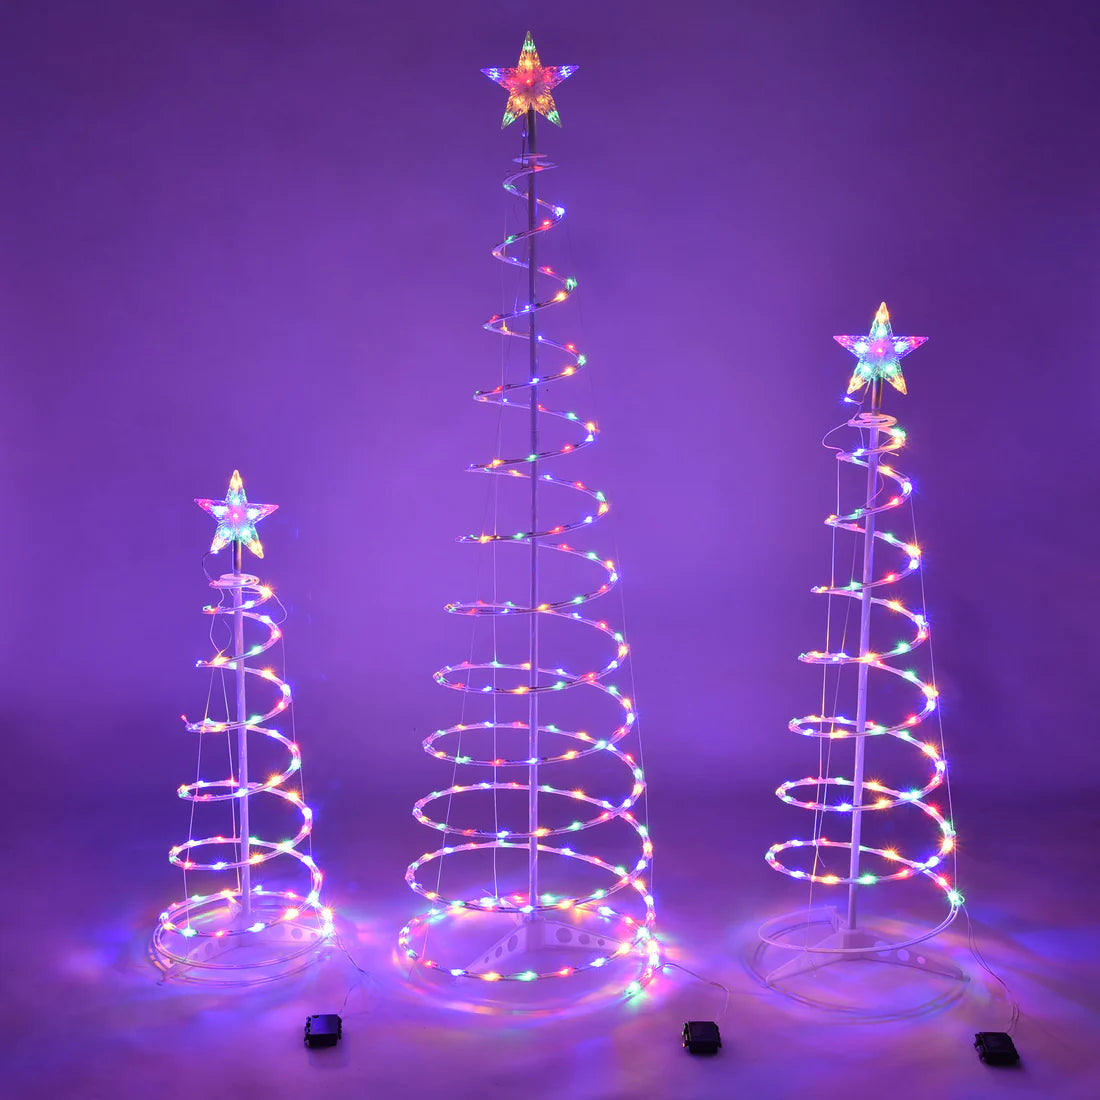 LED Spiral Christmas Tree for Christmas Decorations - Merry Christmas Tree